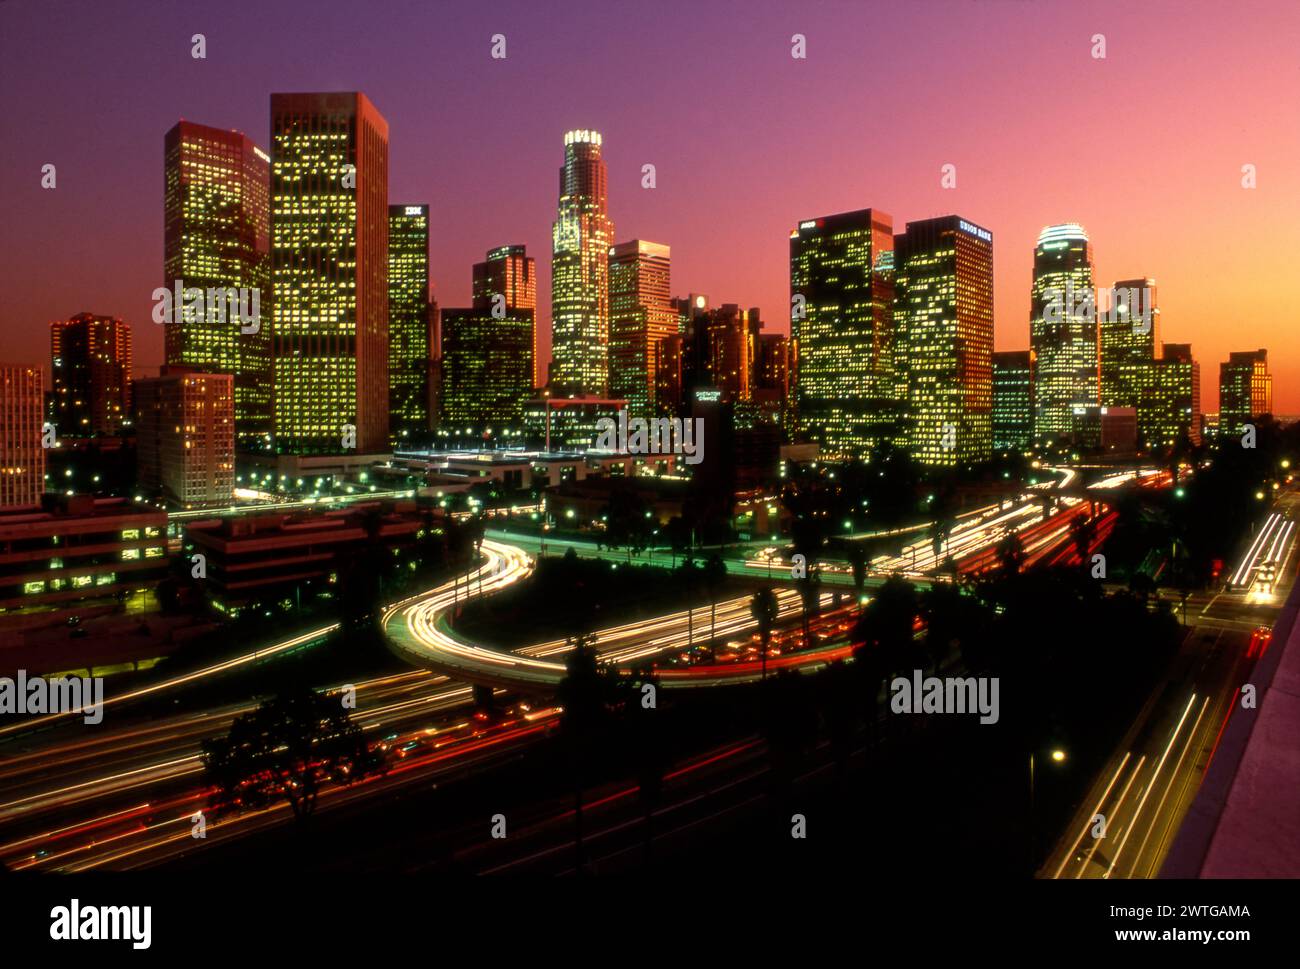 Downtown, Los Angeles, skyline, Harbor Fwy, Los Angeles, California, USA Stock Photo